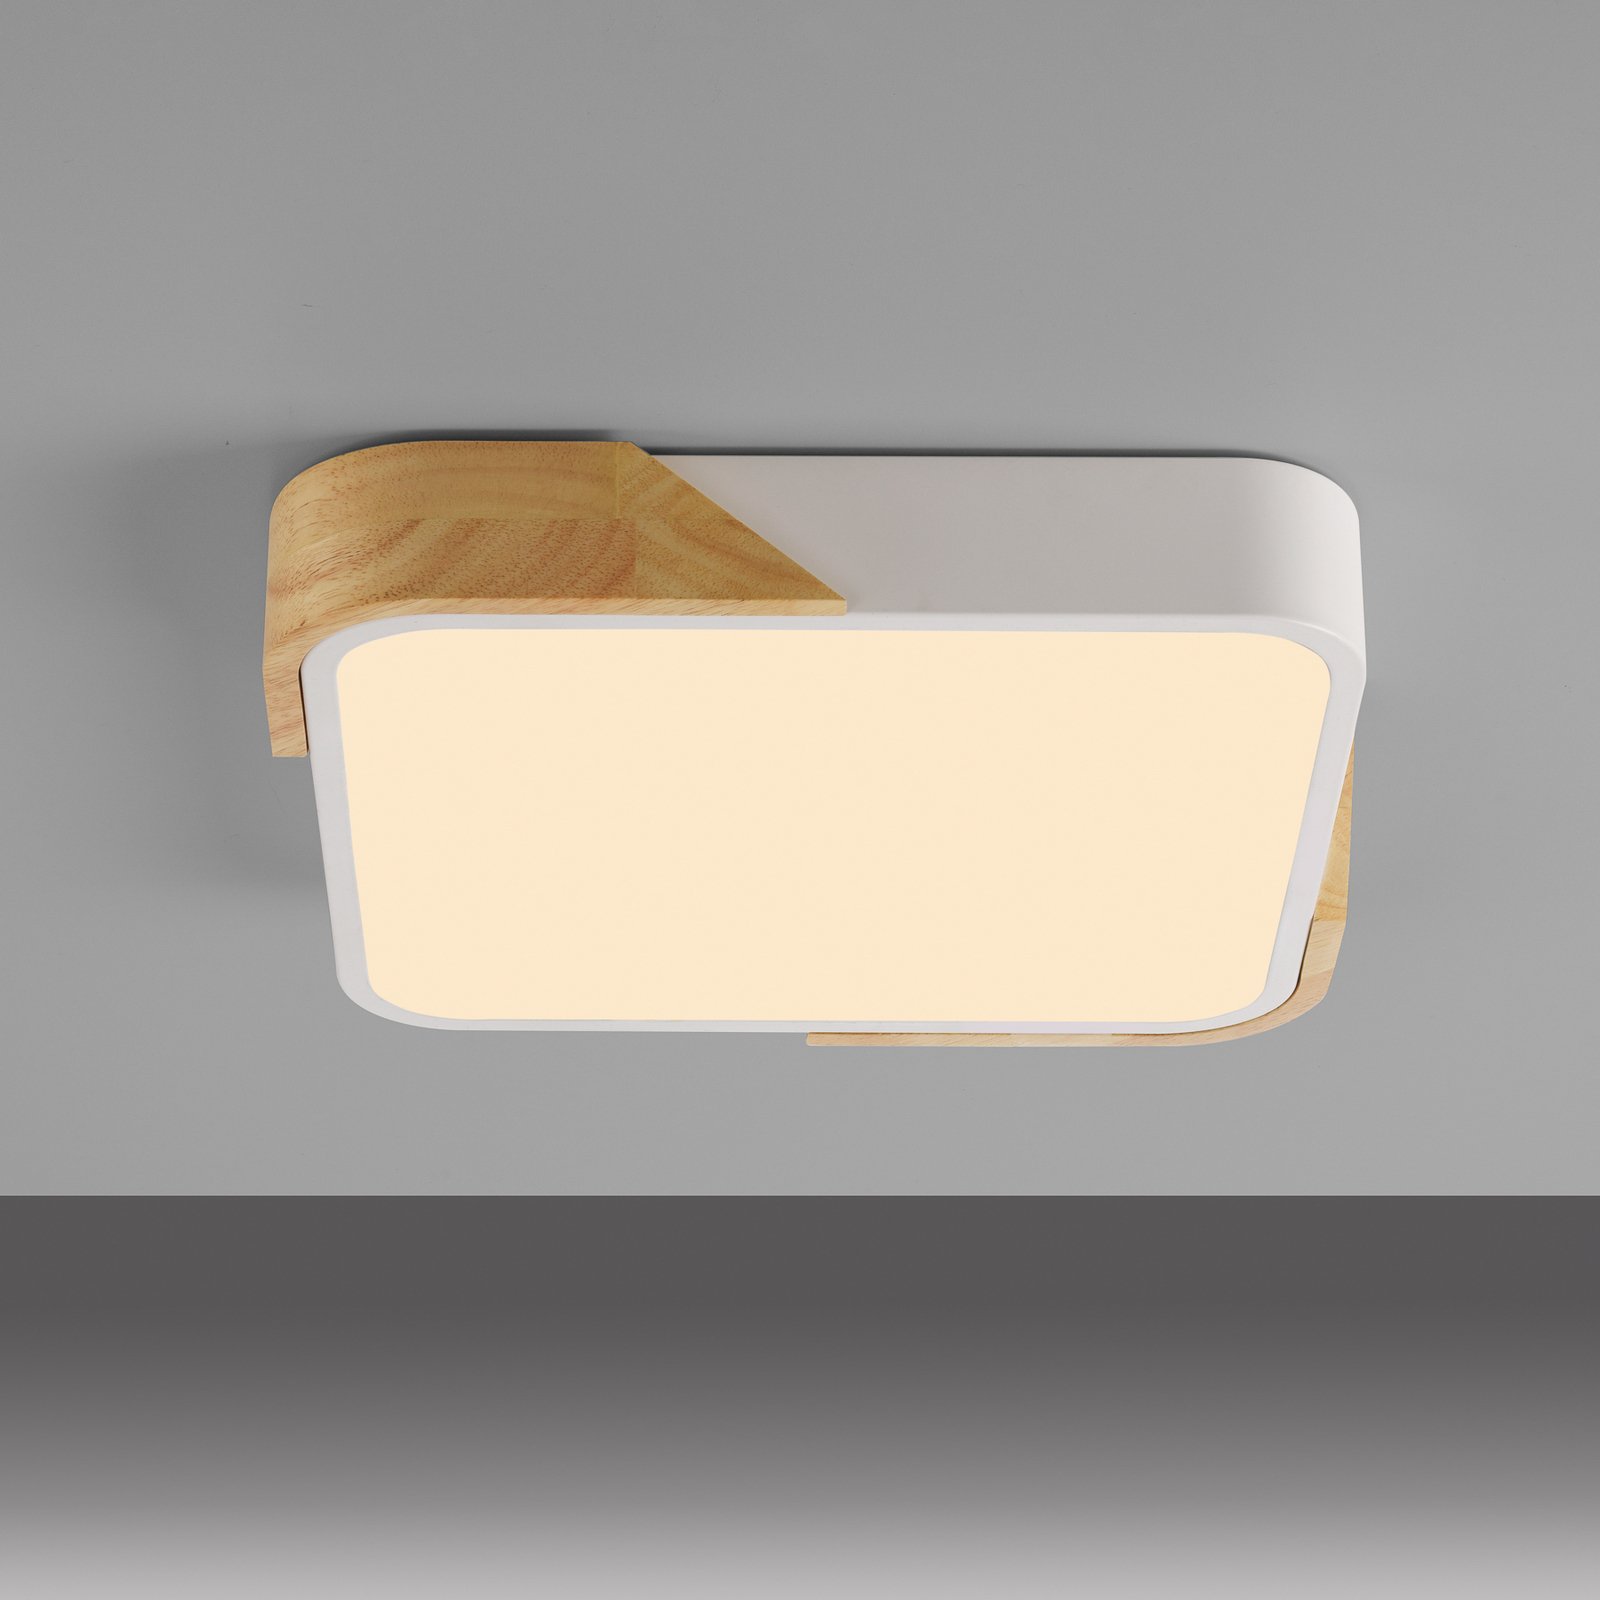 JUST LIGHT. Plafonnier LED Bila, blanc, 32x32 cm, bois